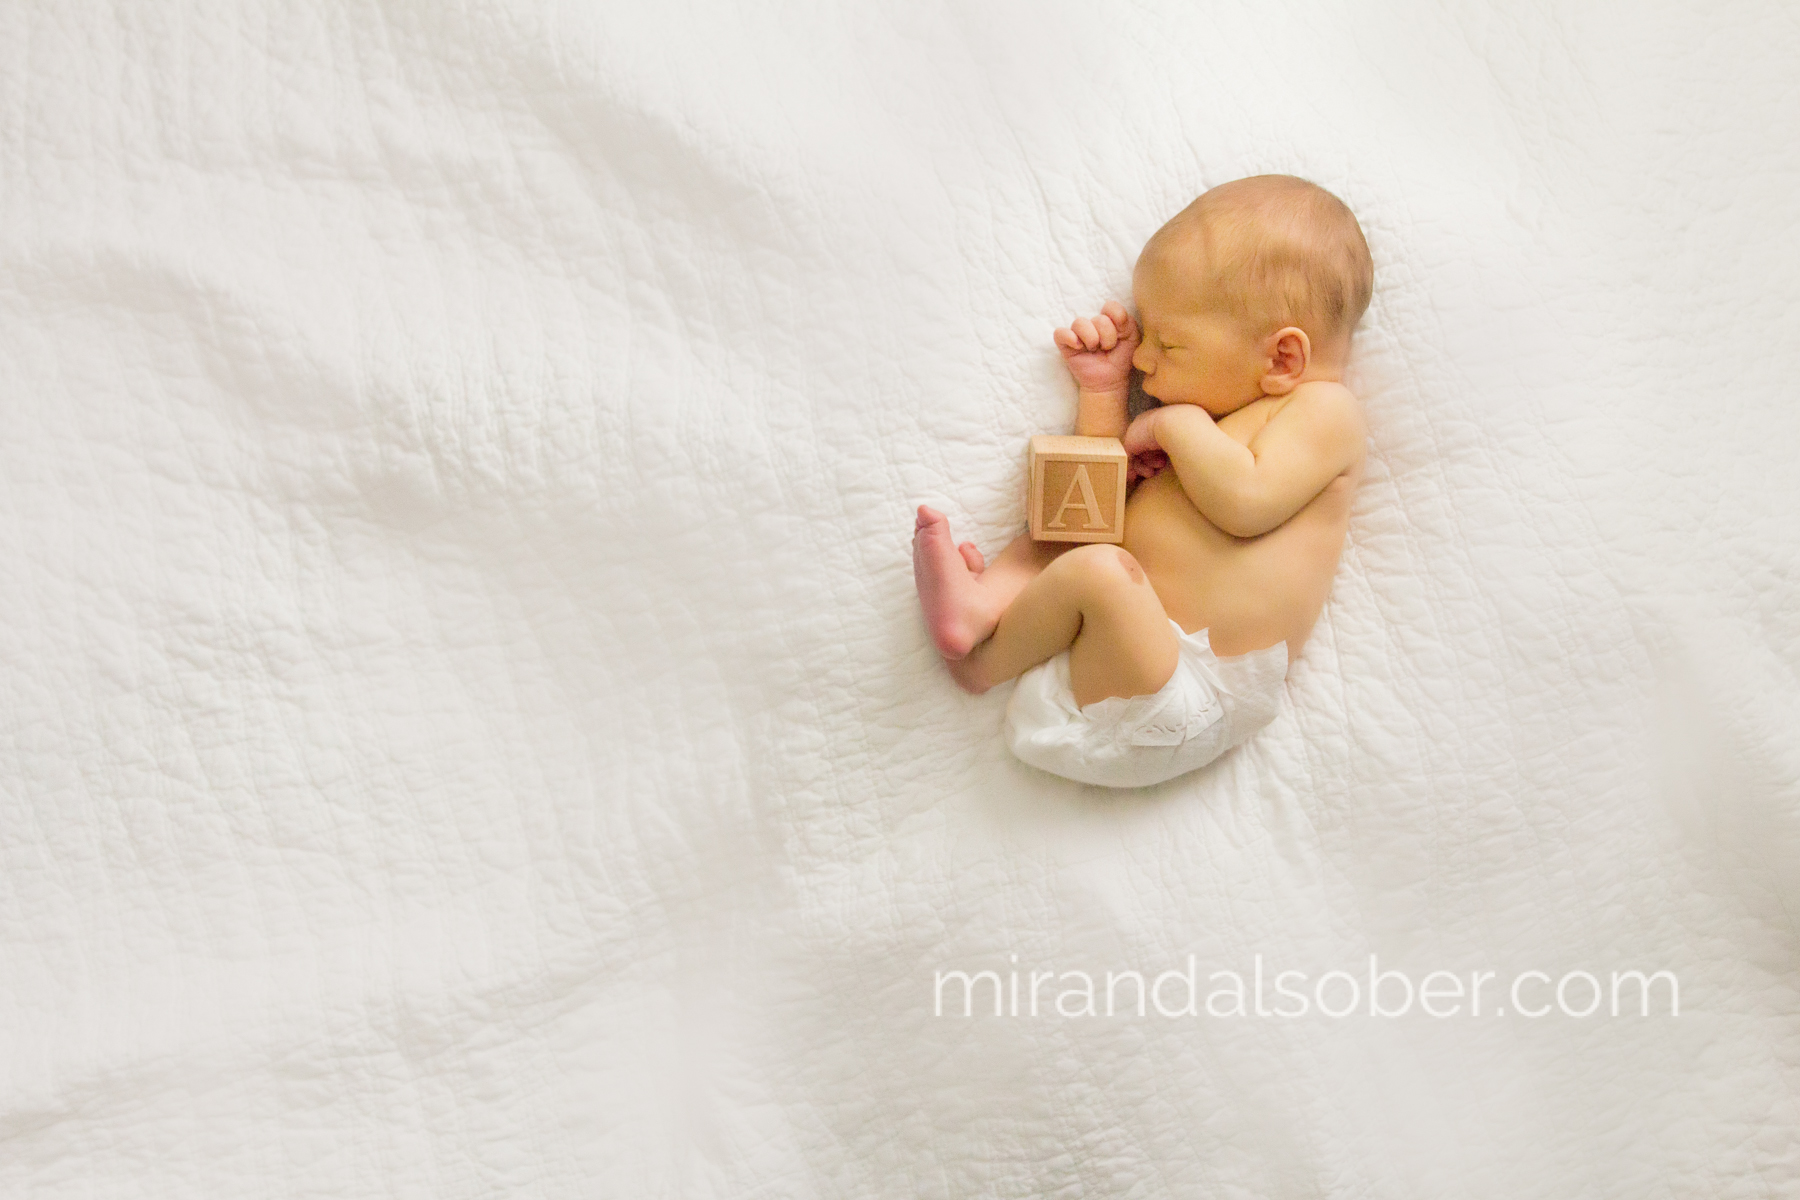 denver newborn photos, Miranda L. Sober Photography, Fort Collins